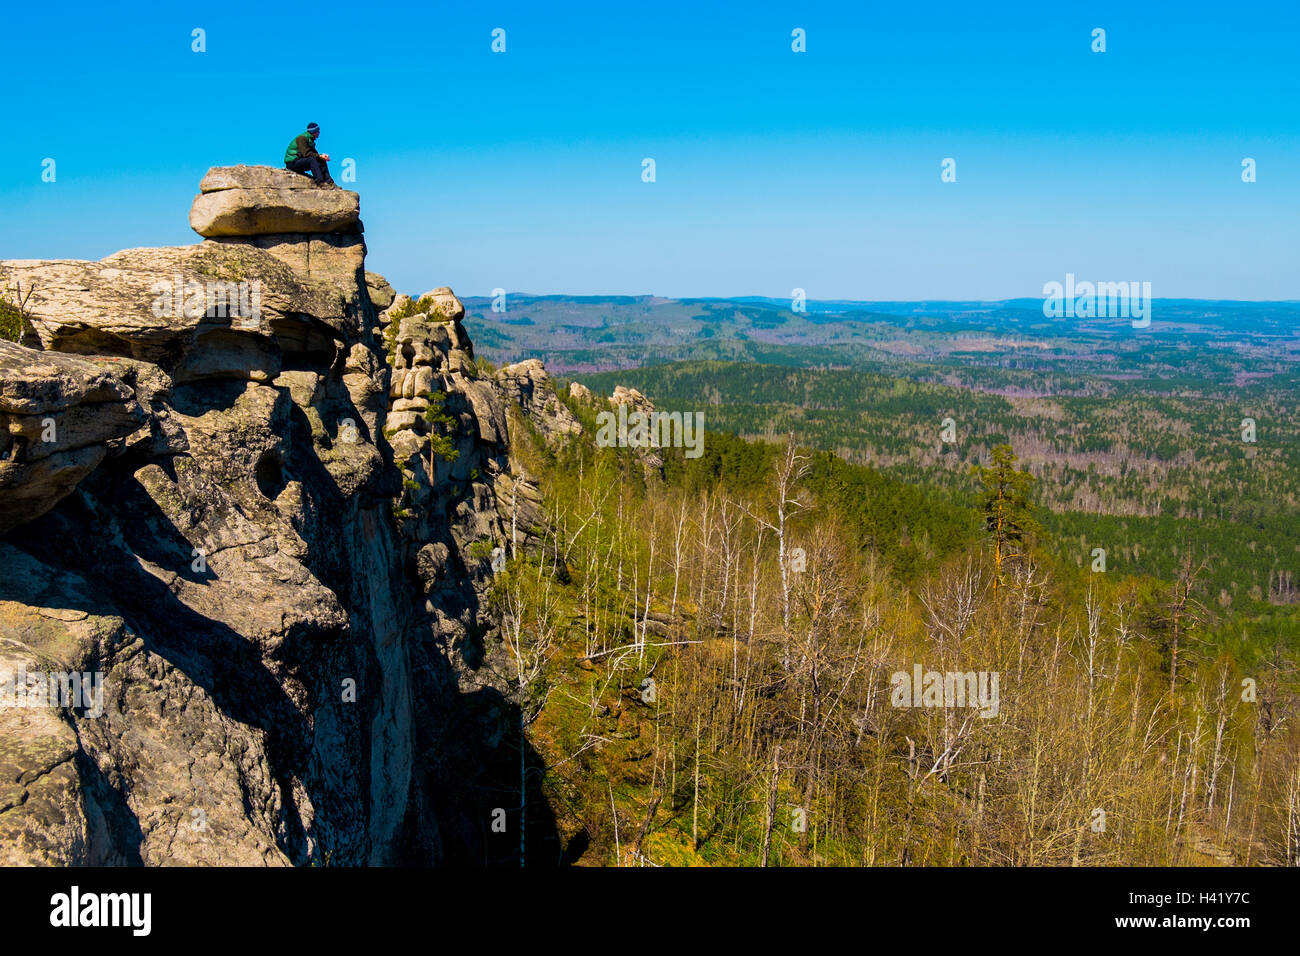 Caucasian man sitting on mountain rock admiring scenic view Stock Photo